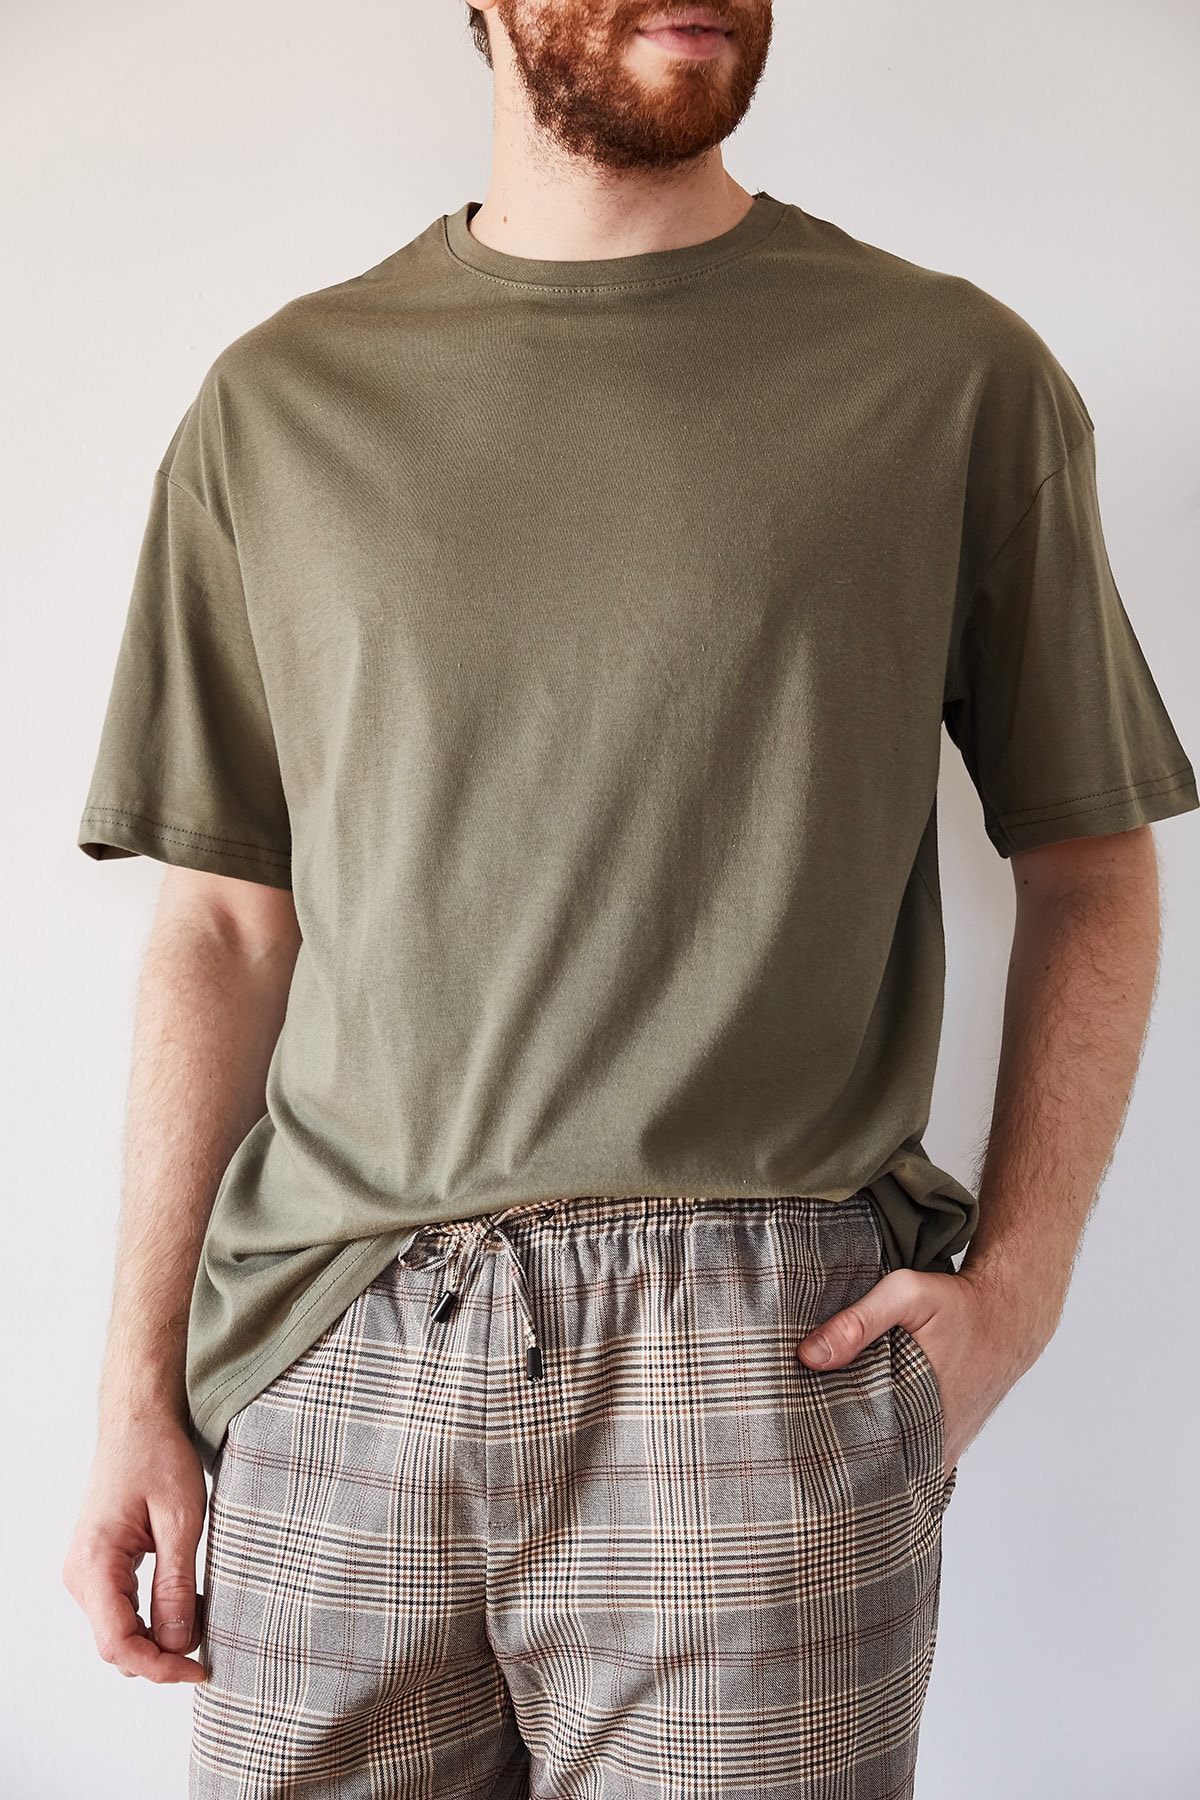 XHAN Men's Khaki Basic Wide Cut Oversize T-shirt 1kxe1-44215-09